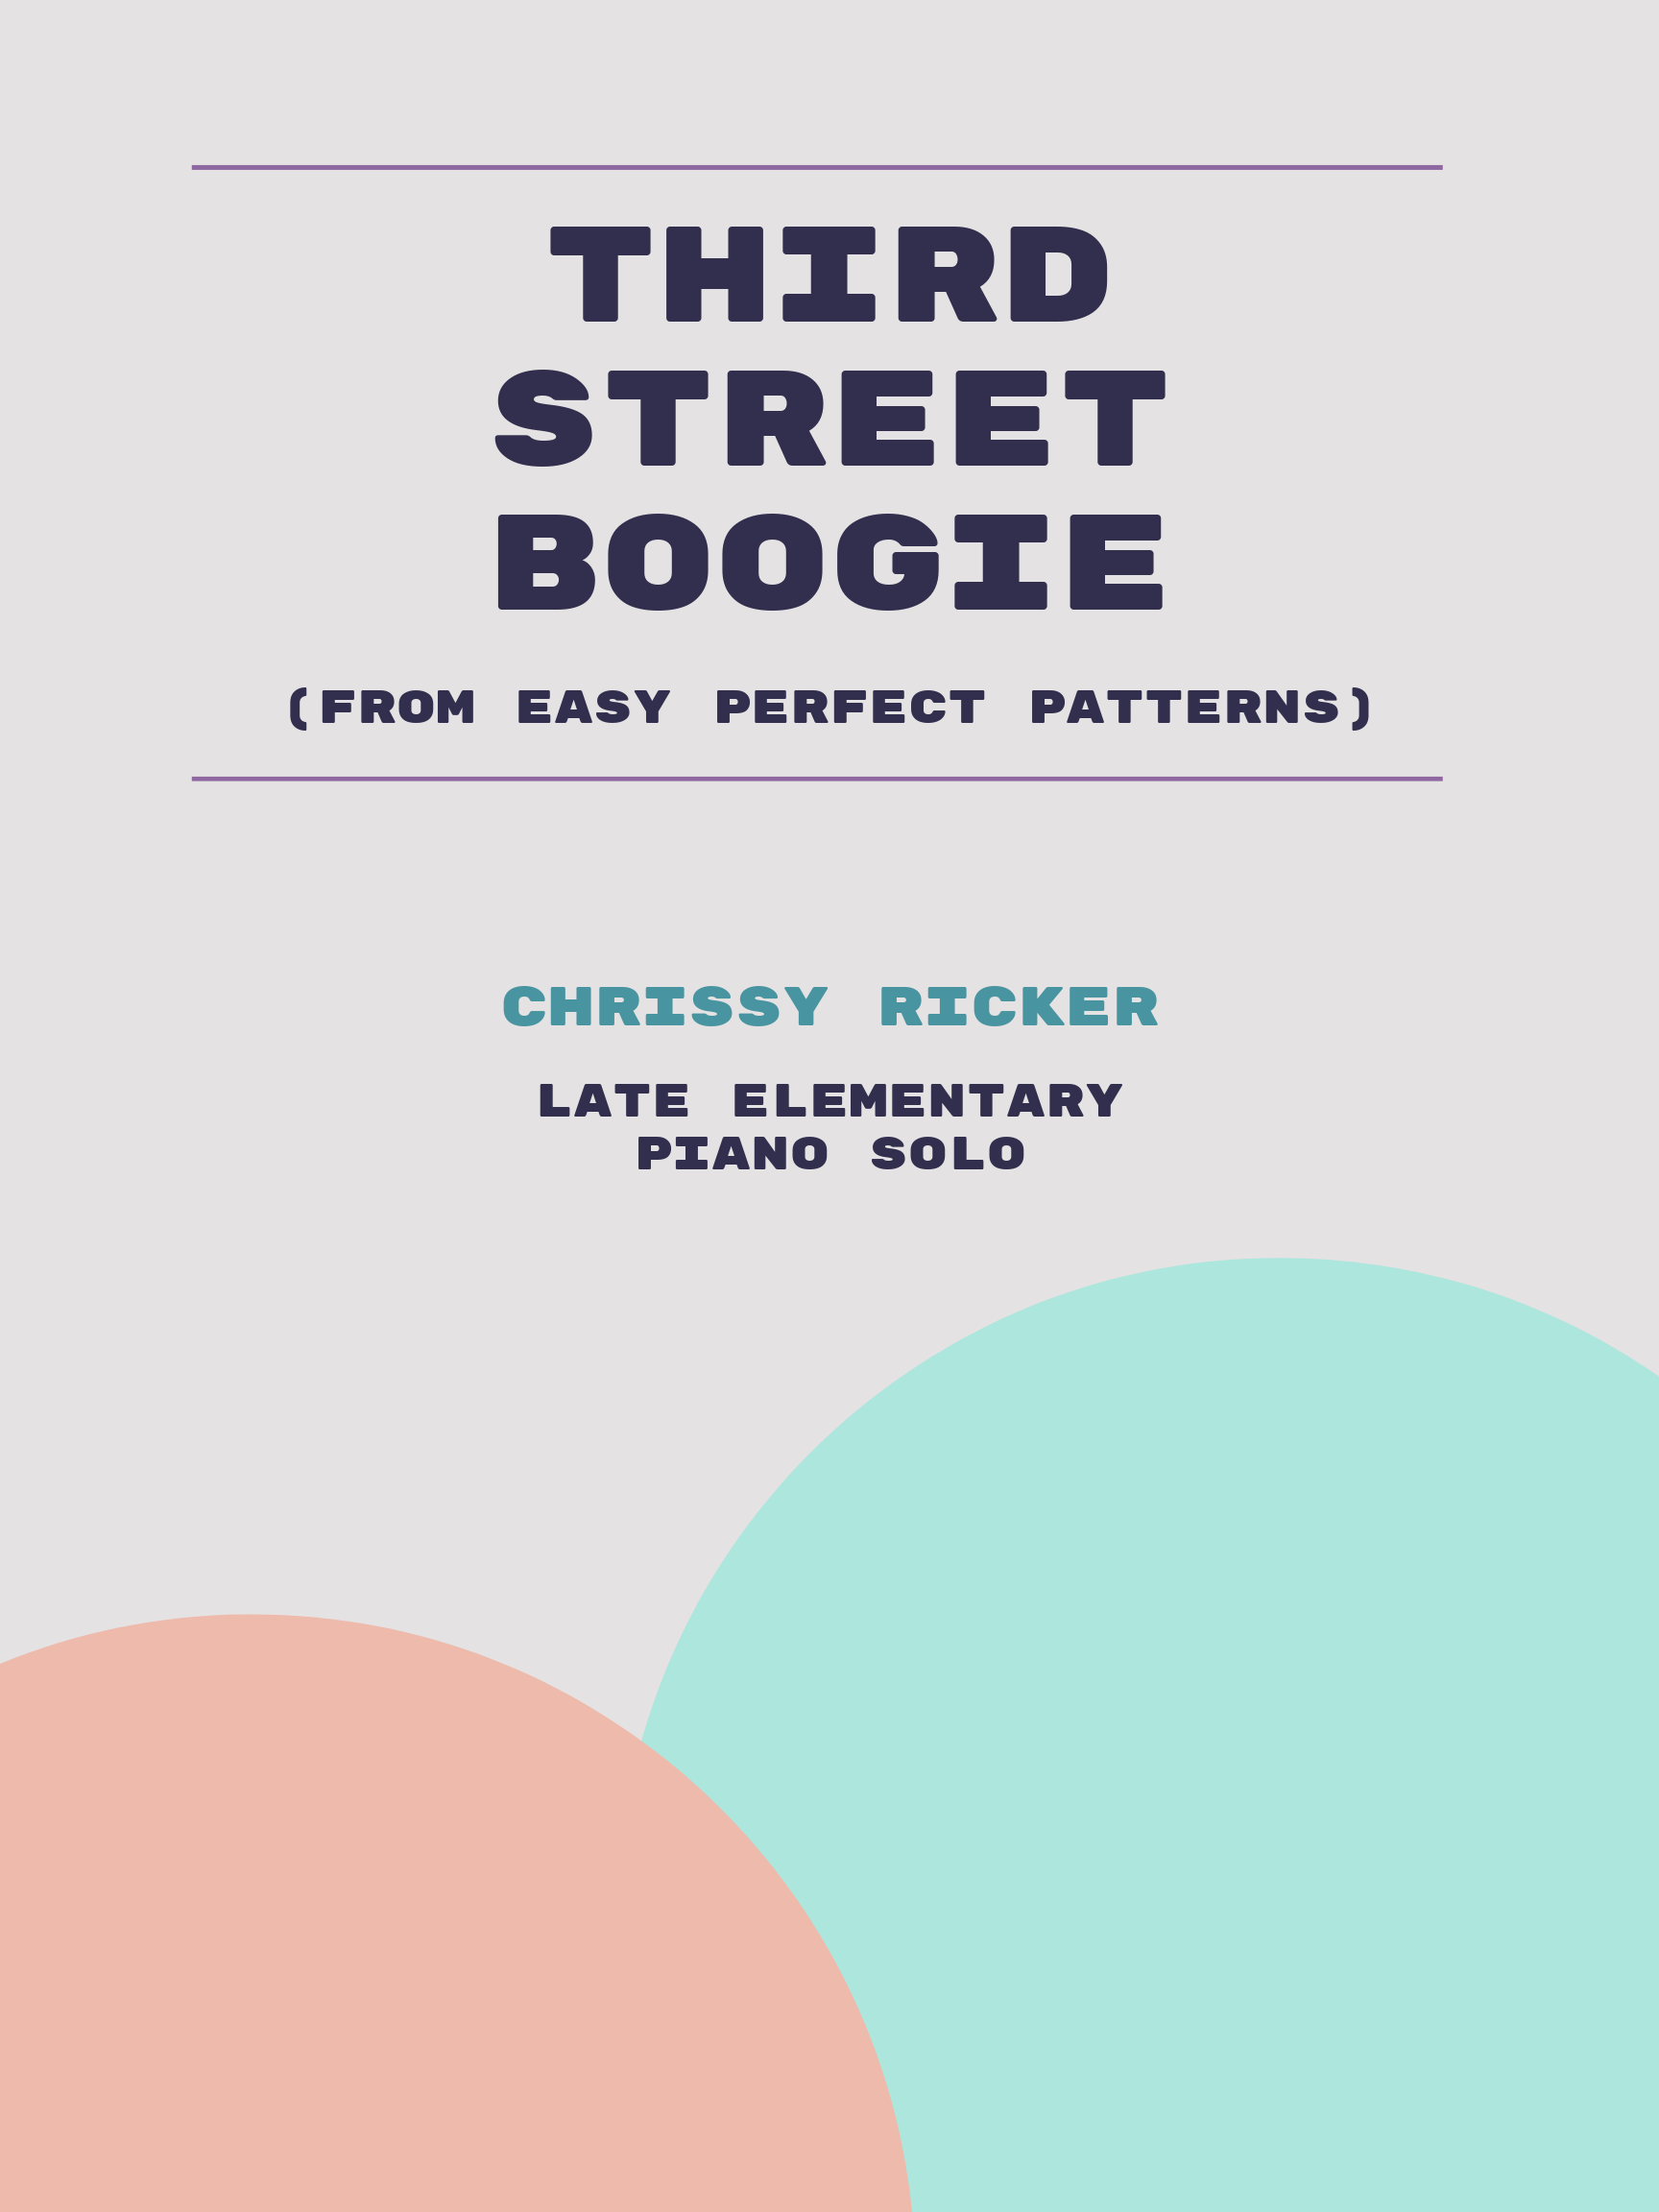 Third Street Boogie by Chrissy Ricker